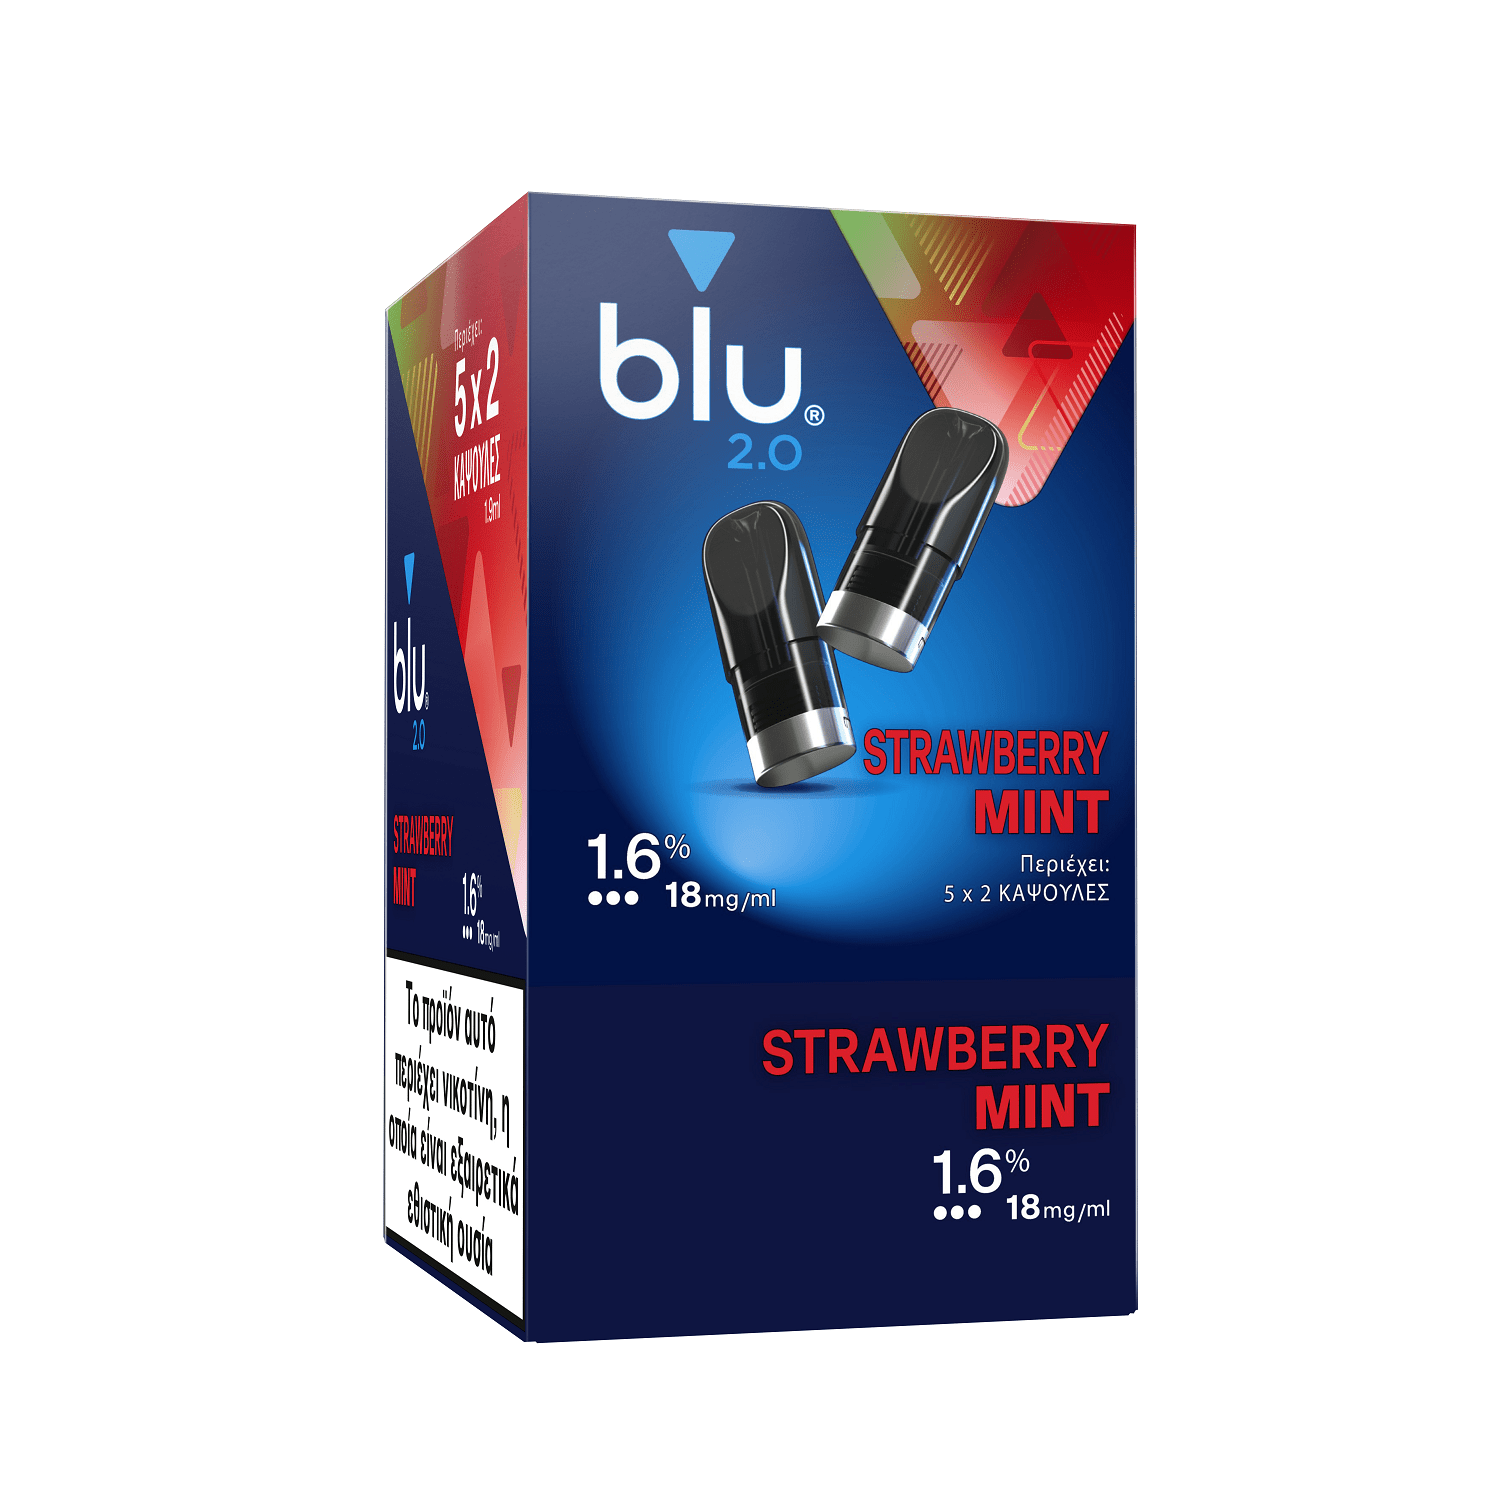 BLU 2.0 CAPSULES STRAWBERRY MINT - usaheatproduct.store